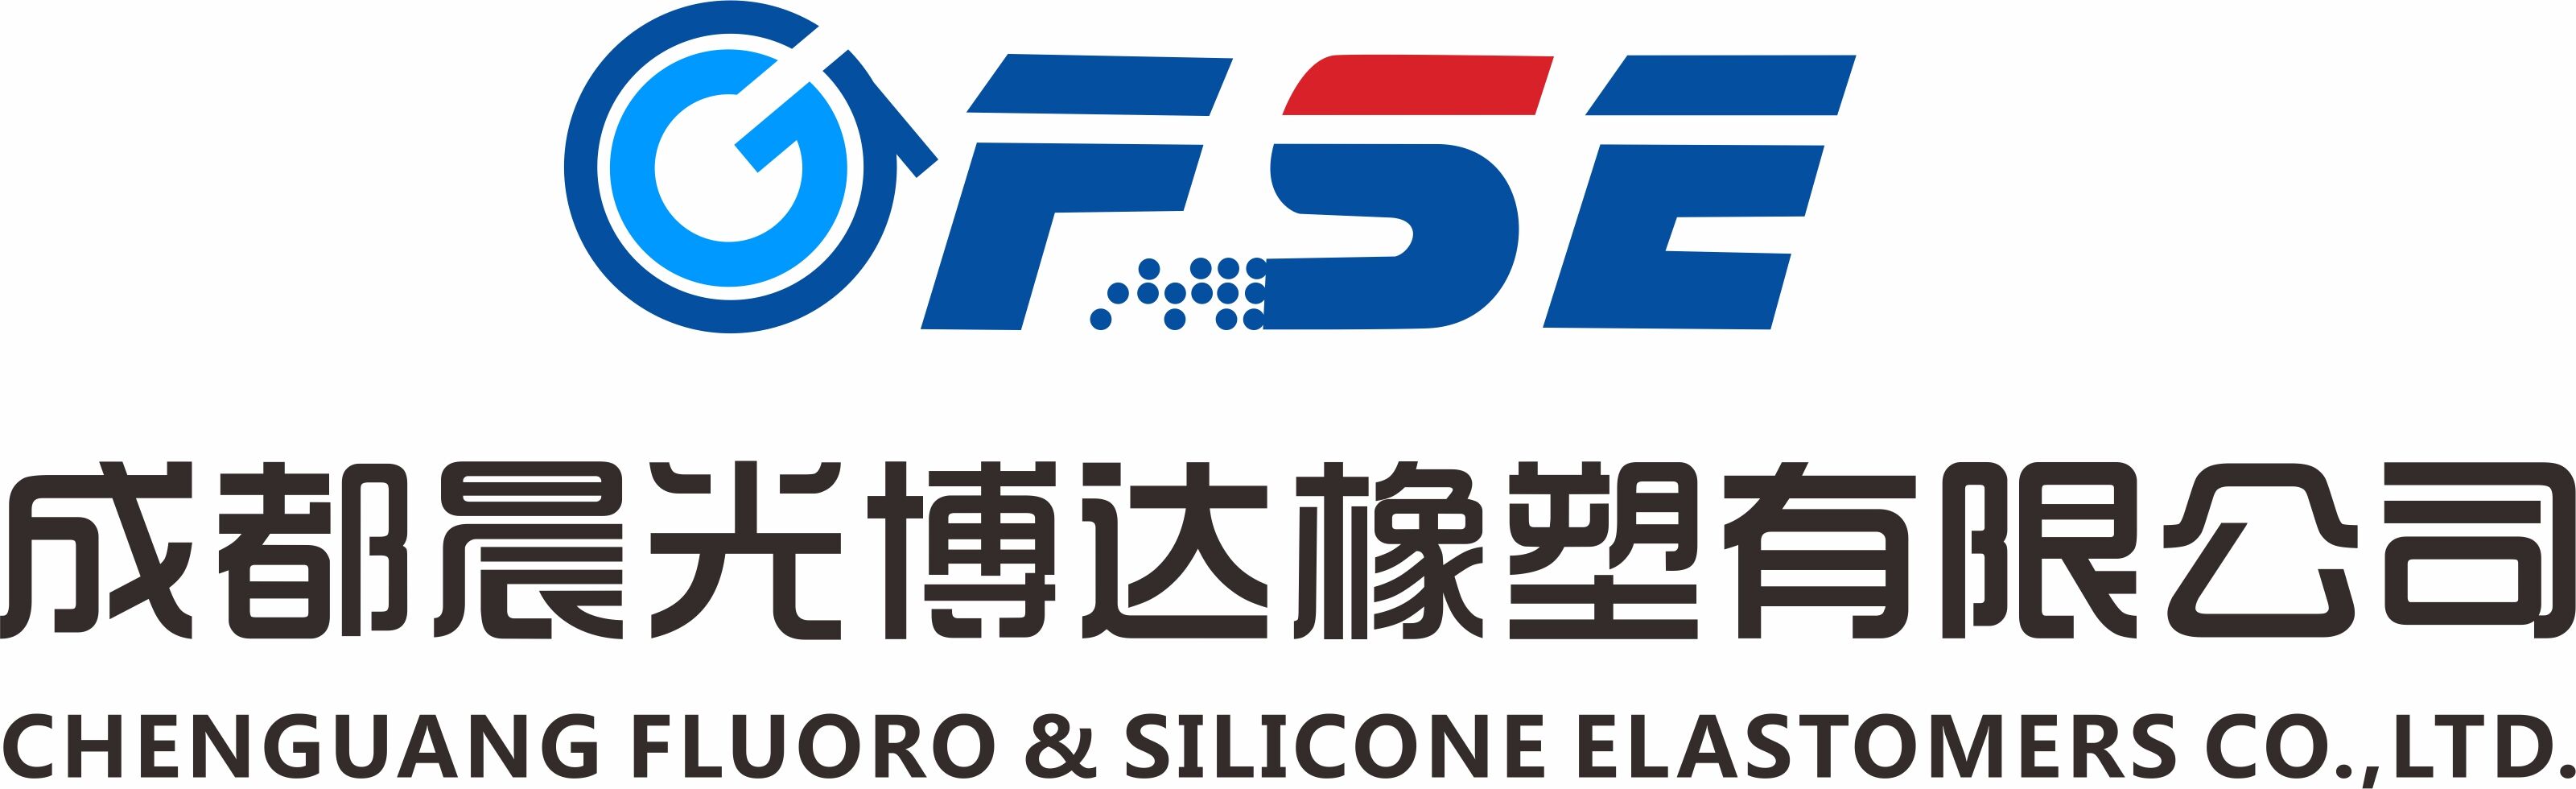 Chenguang Fluoro & Silicone Elastomers Co., Ltd.